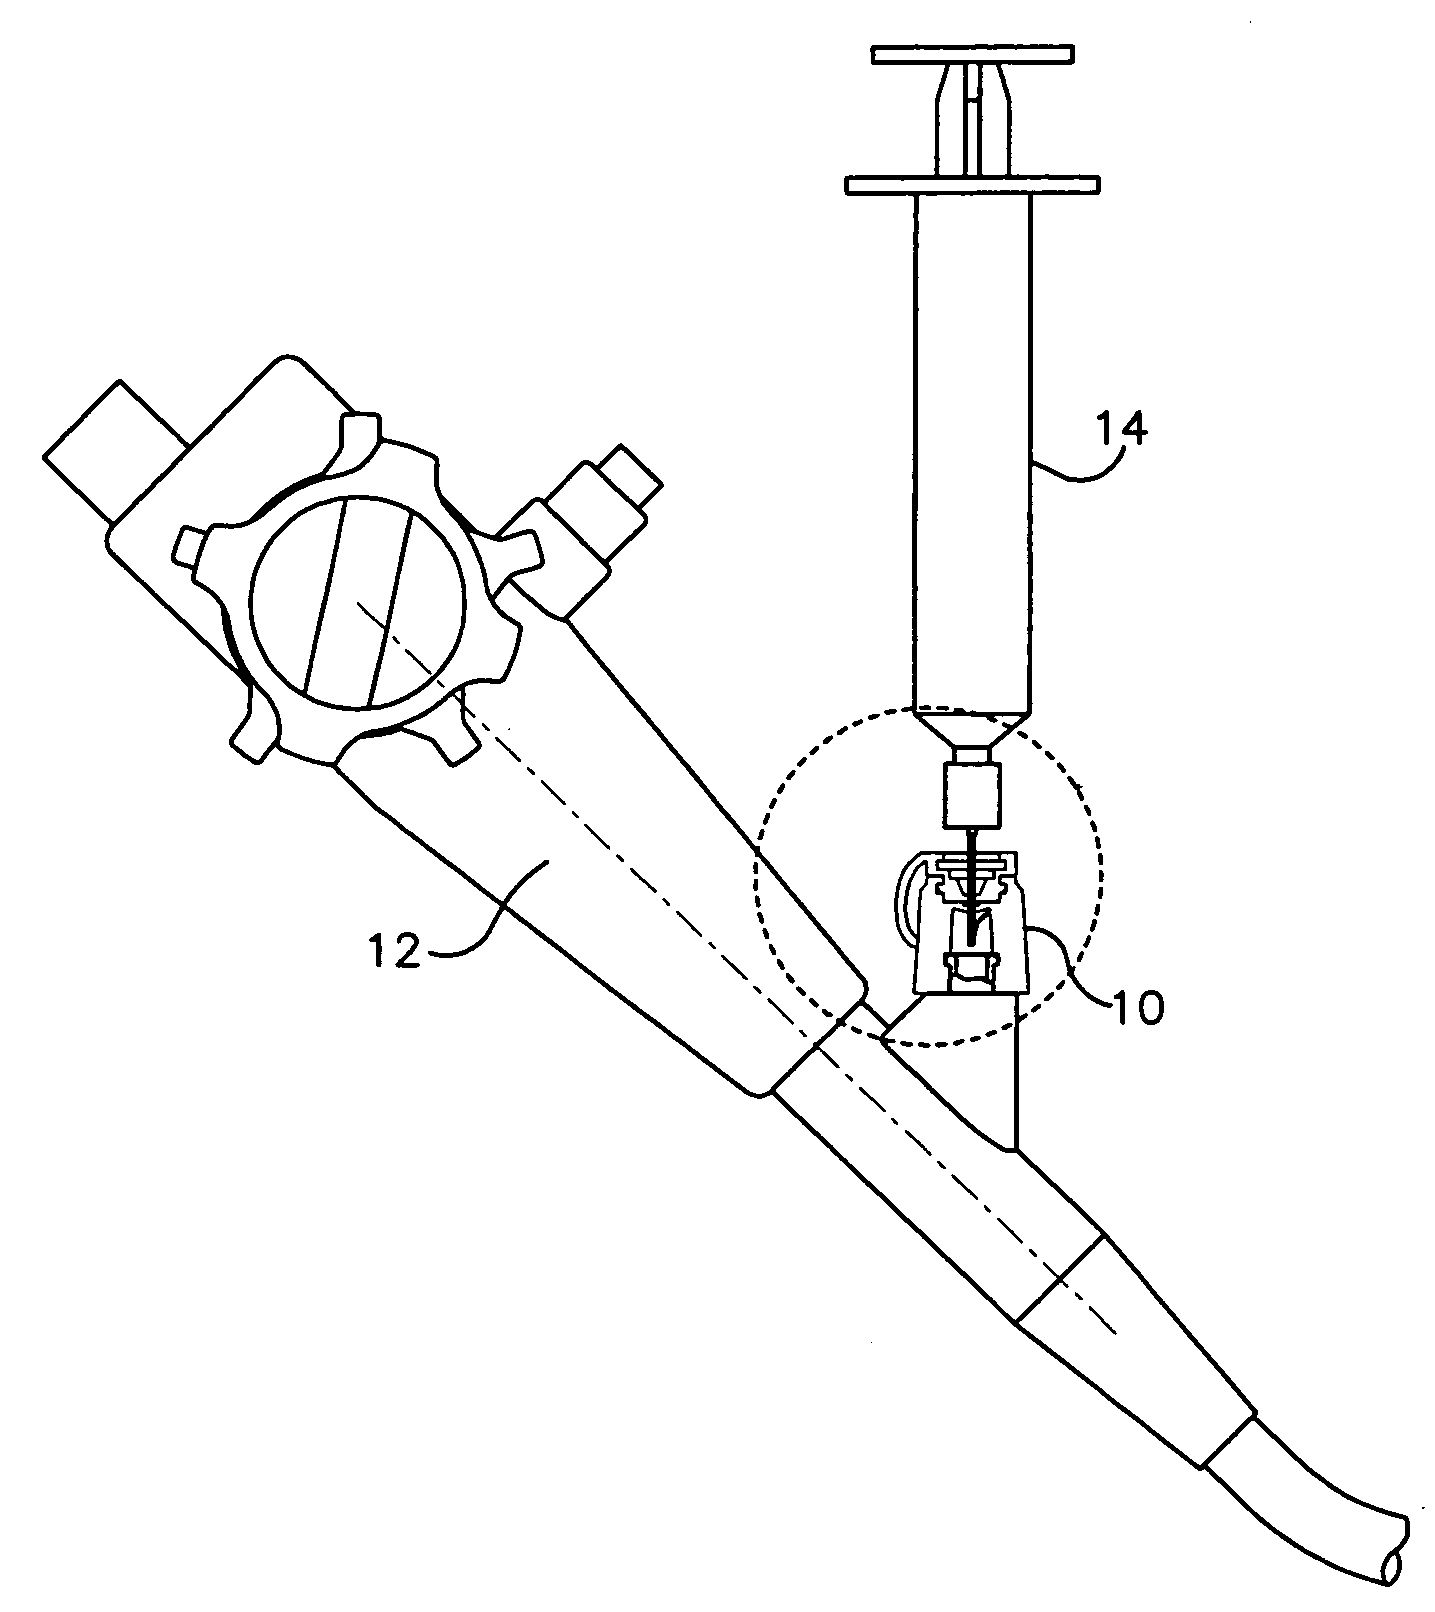 Irrigating biopsy inlet valve